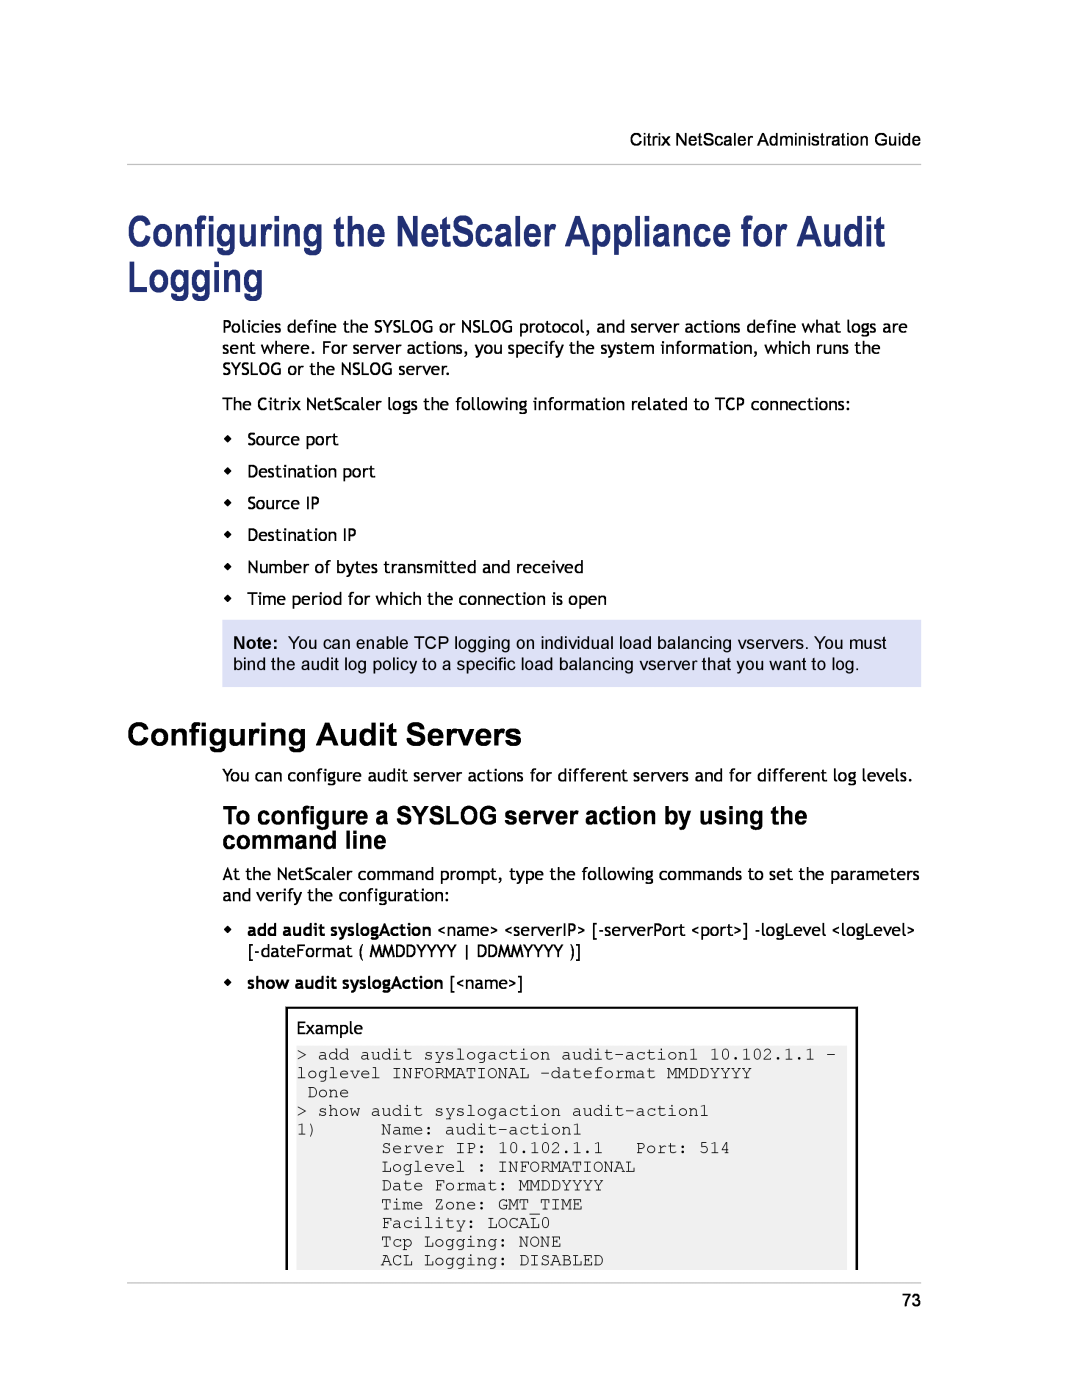 Citrix Systems CITRIX NETSCALER 9.3 manual Configuring the NetScaler Appliance for Audit Logging, Configuring Audit Servers 